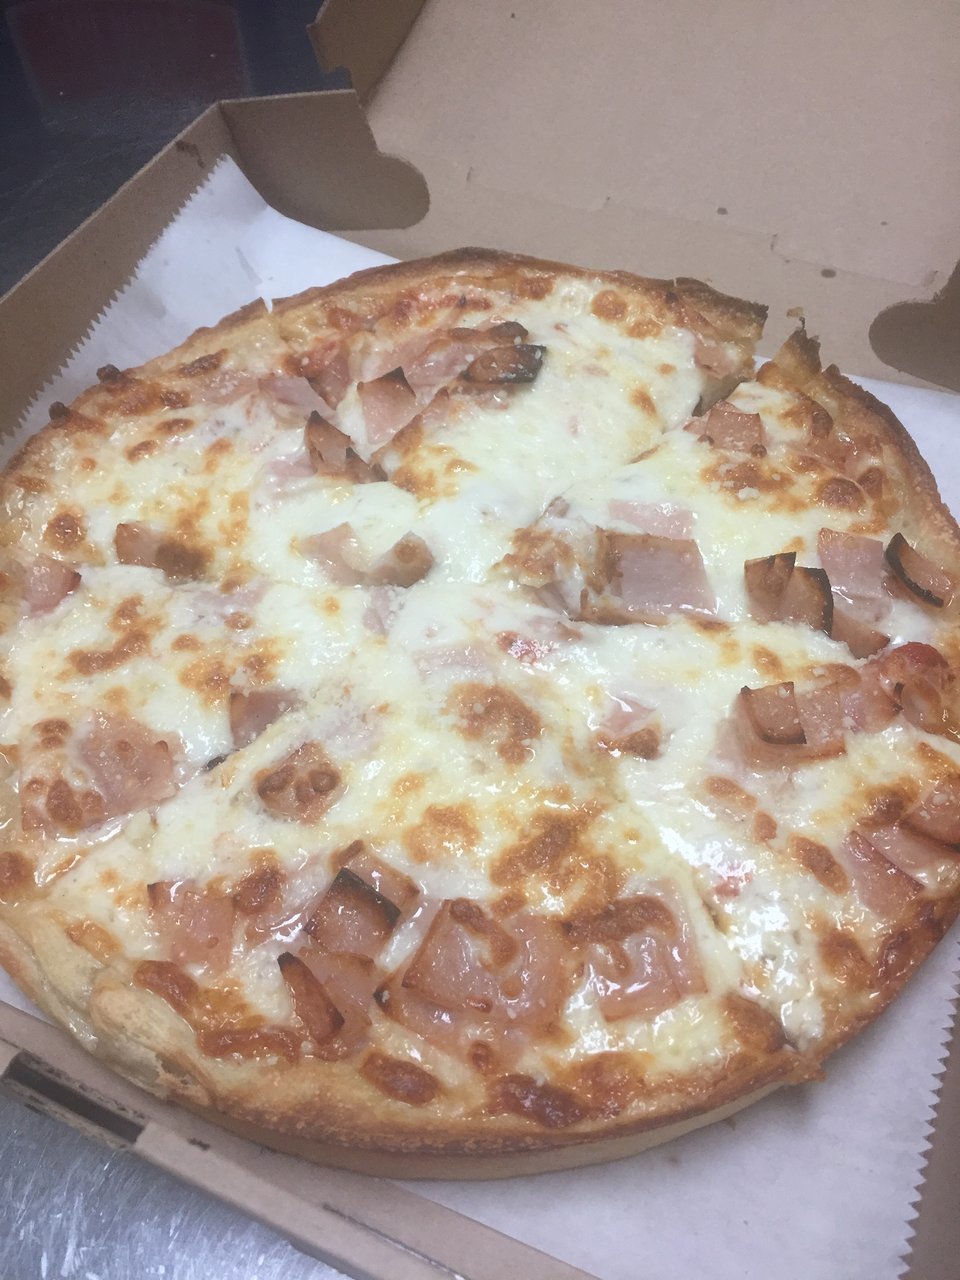 Athen's Pizza